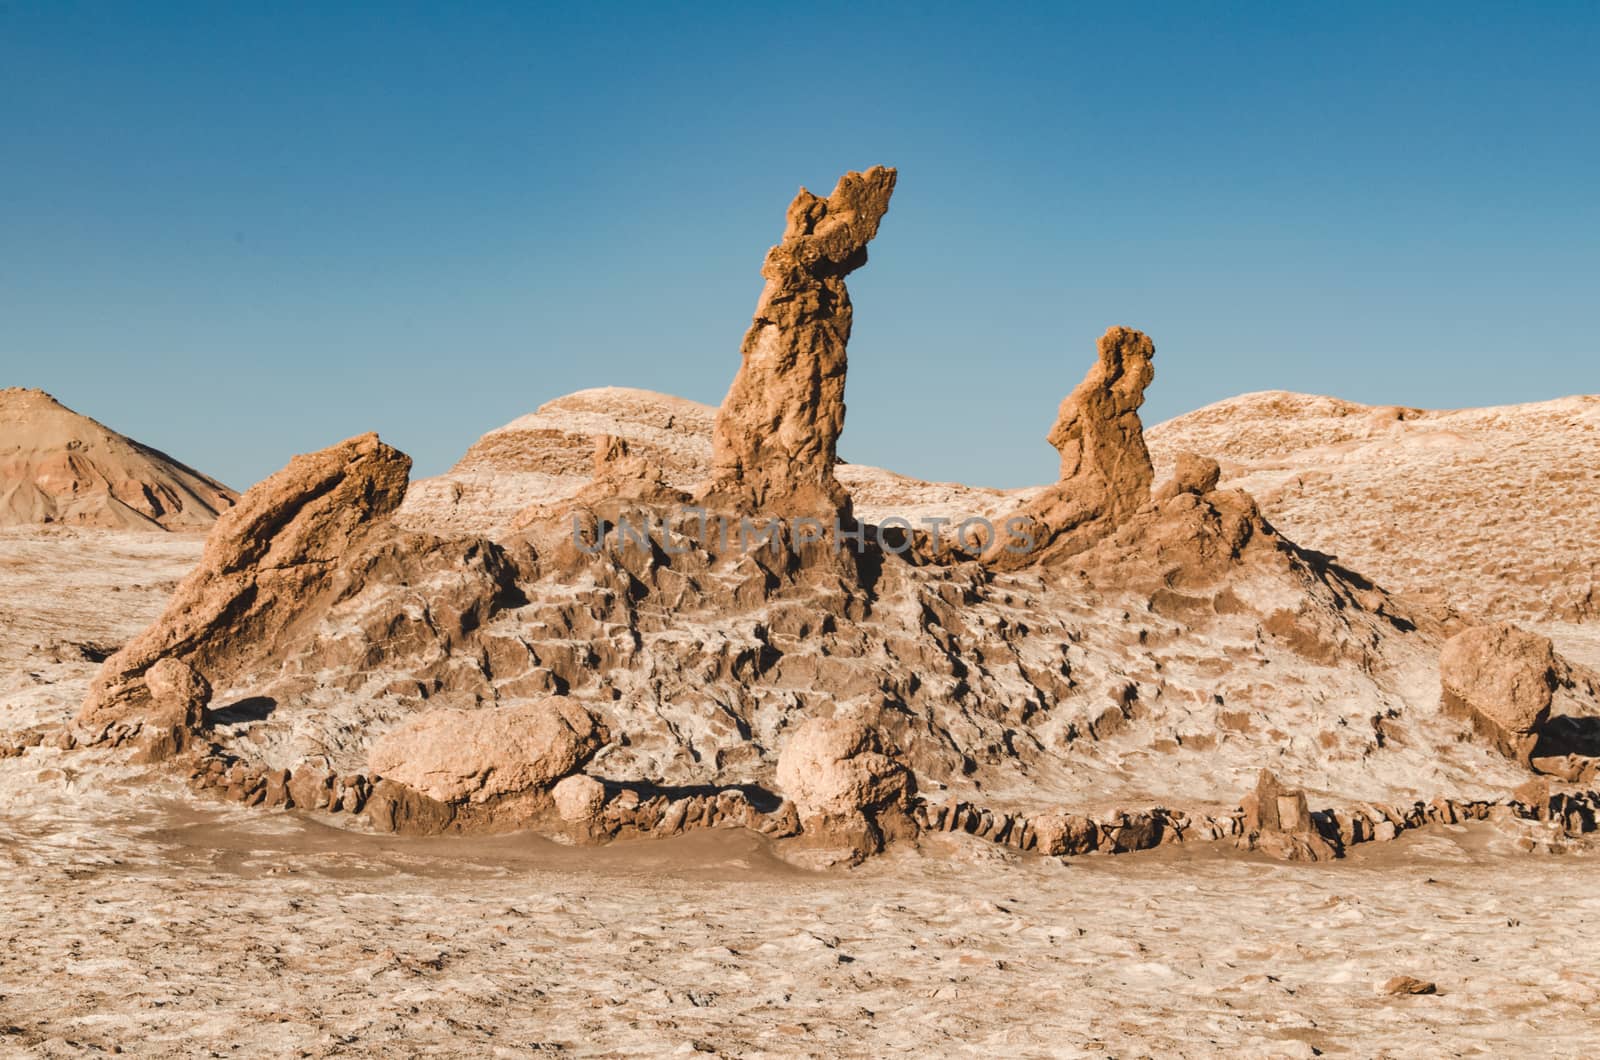 Beautiful salt sculptures in Atacama desert, Chile by mikelju